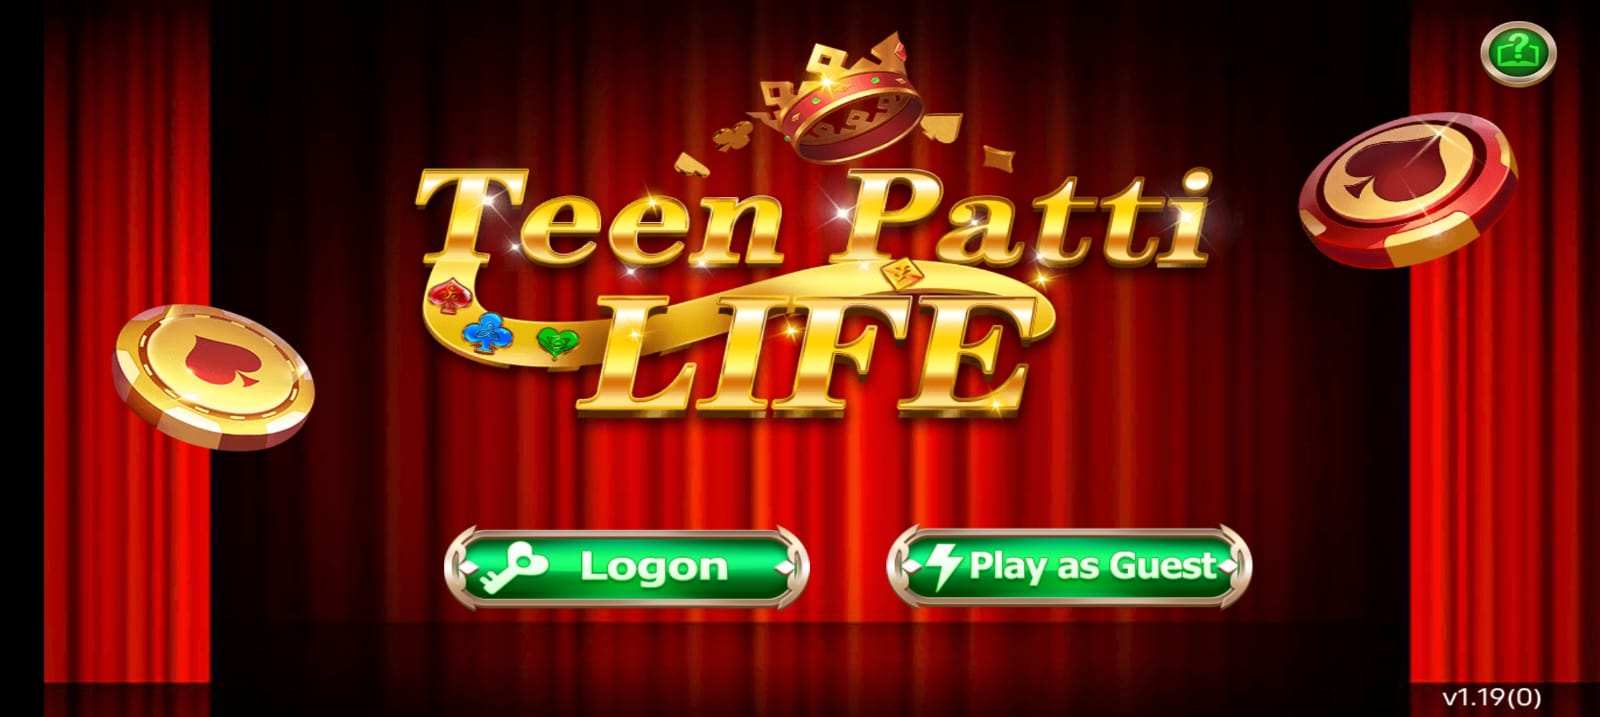 Create Account In Teen Patti Life App